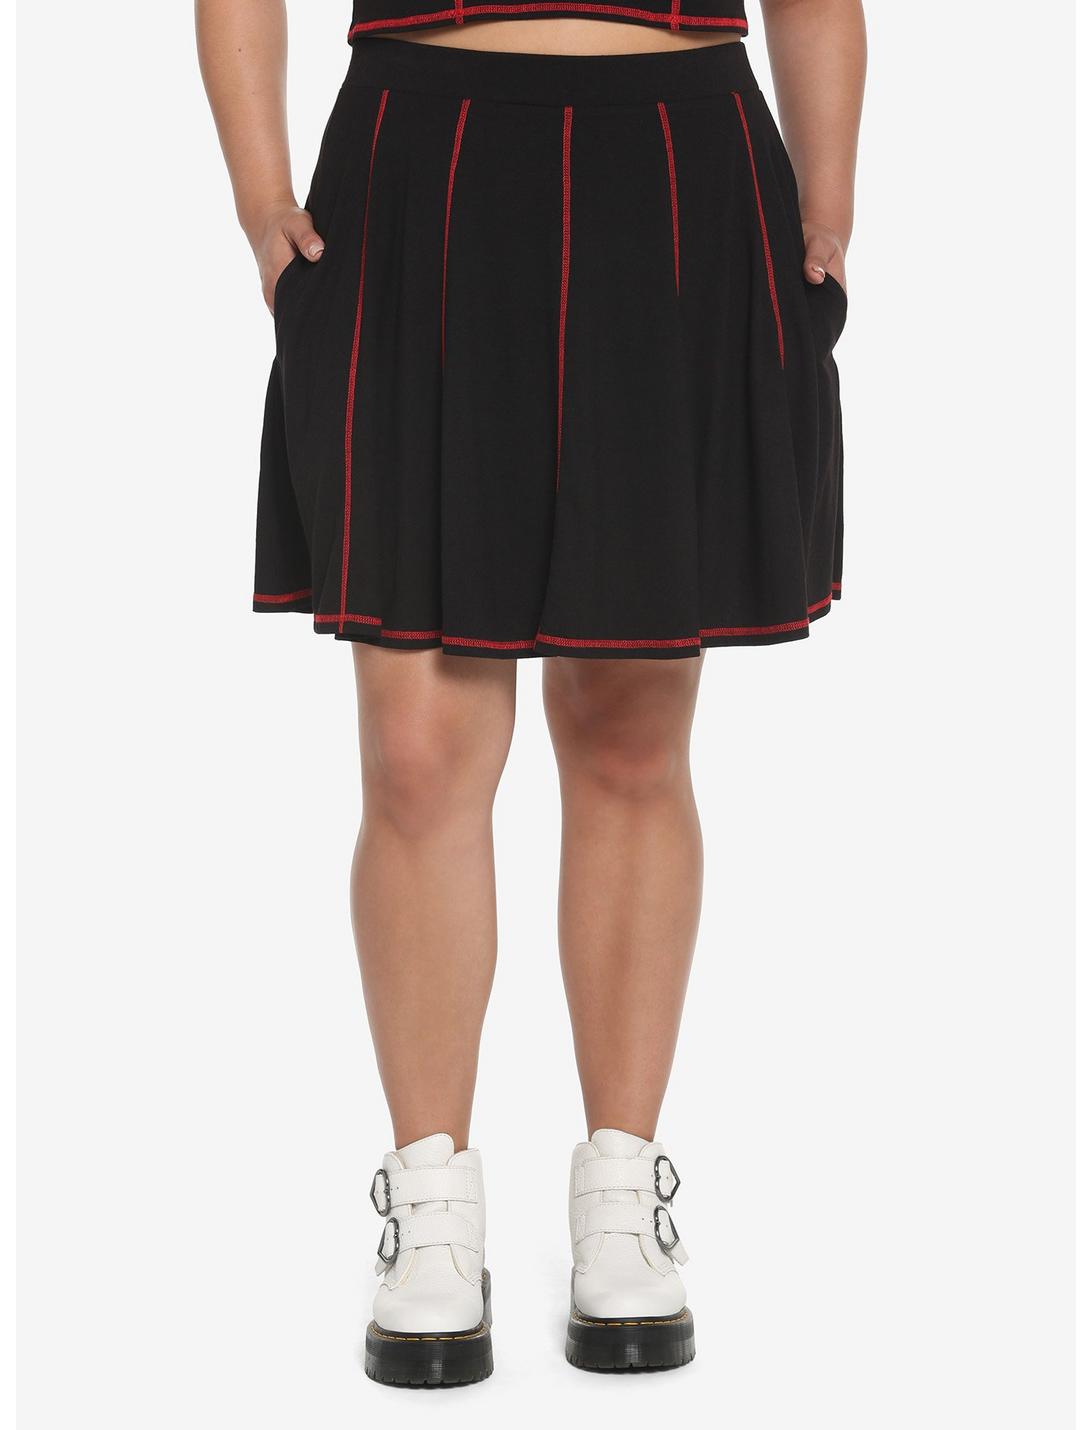 Black & Red Contrast Stitch Skirt Plus Size, BLACK  RED, hi-res